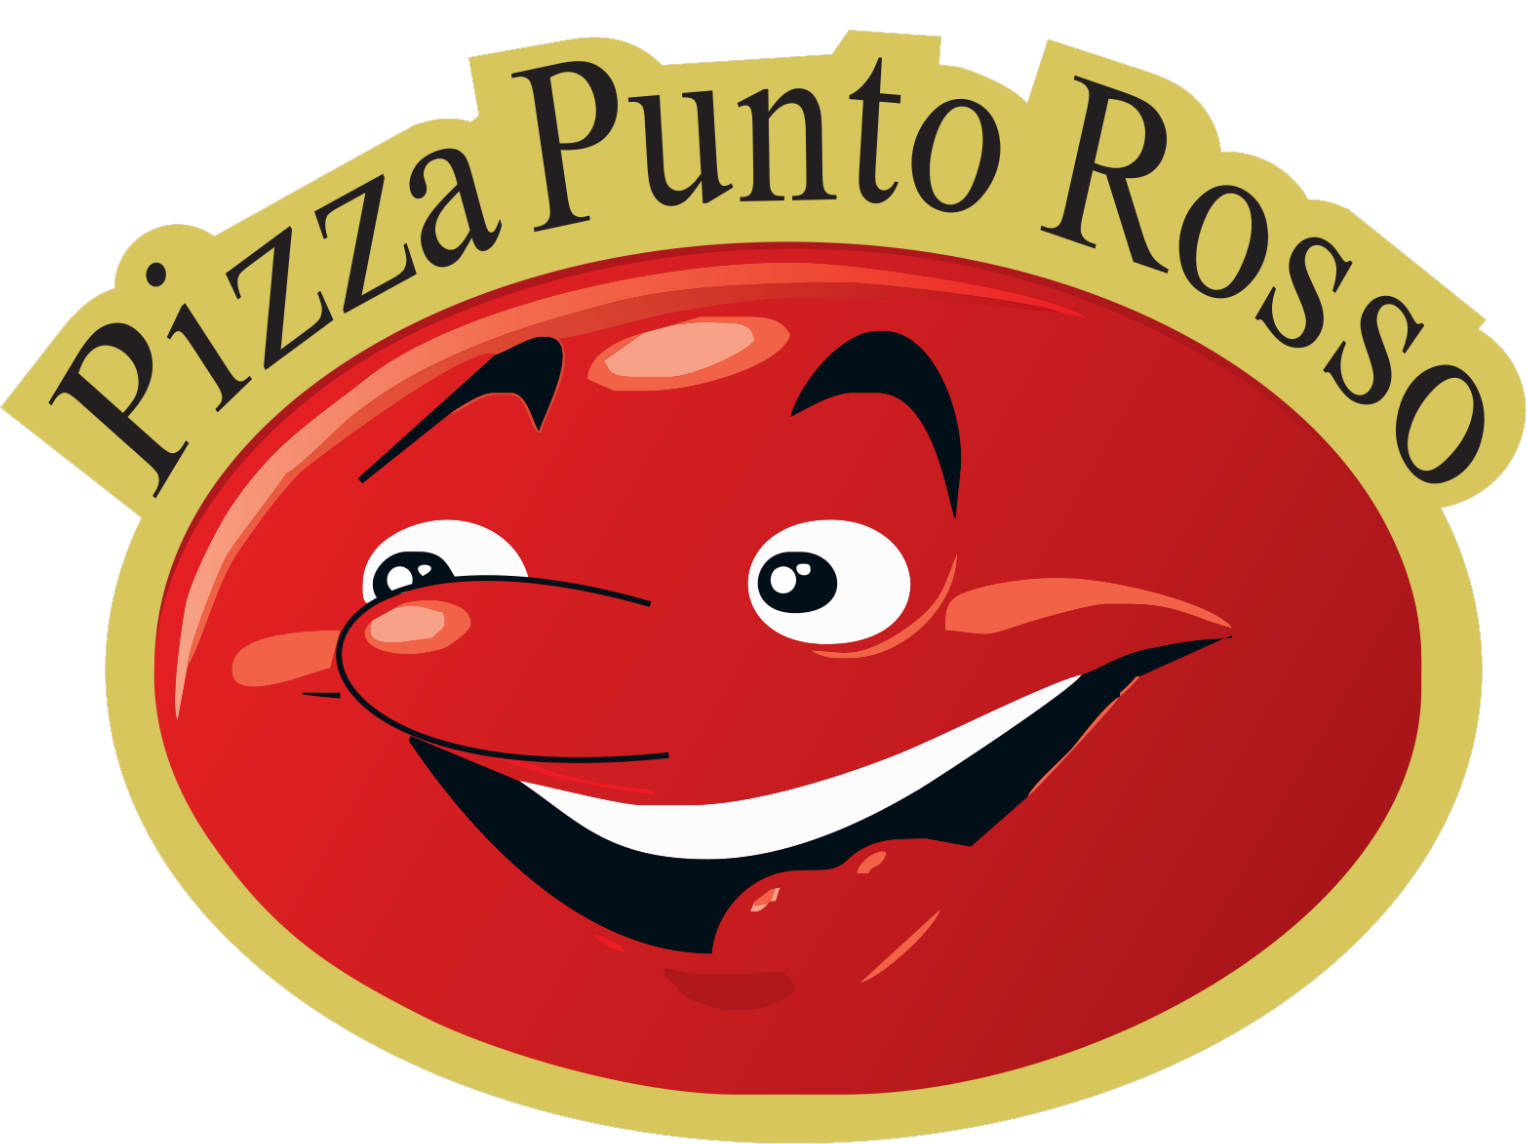 (c) Pizza-puntorosso.ch